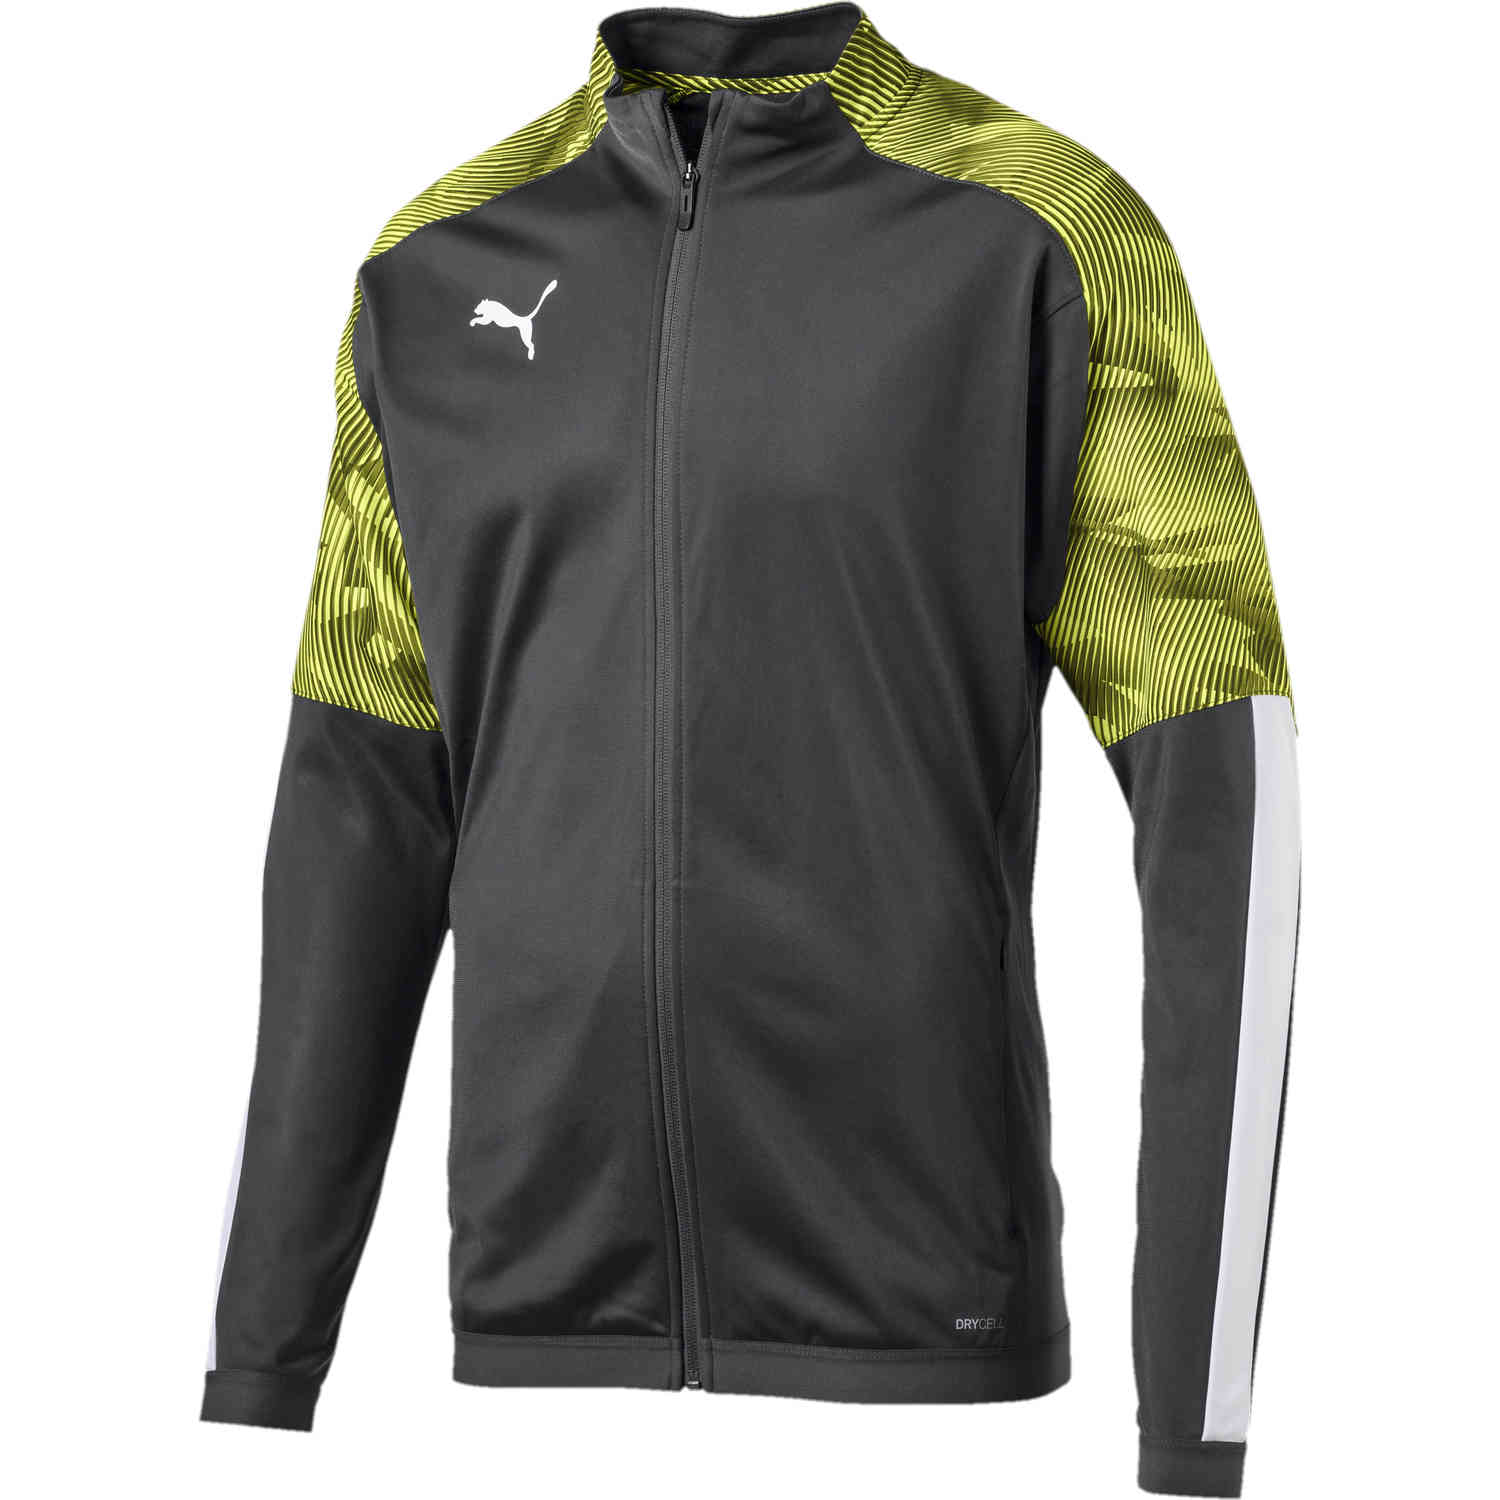 Puma Cup Training Jacket - Asphalt/Fizzy Yellow - SoccerPro